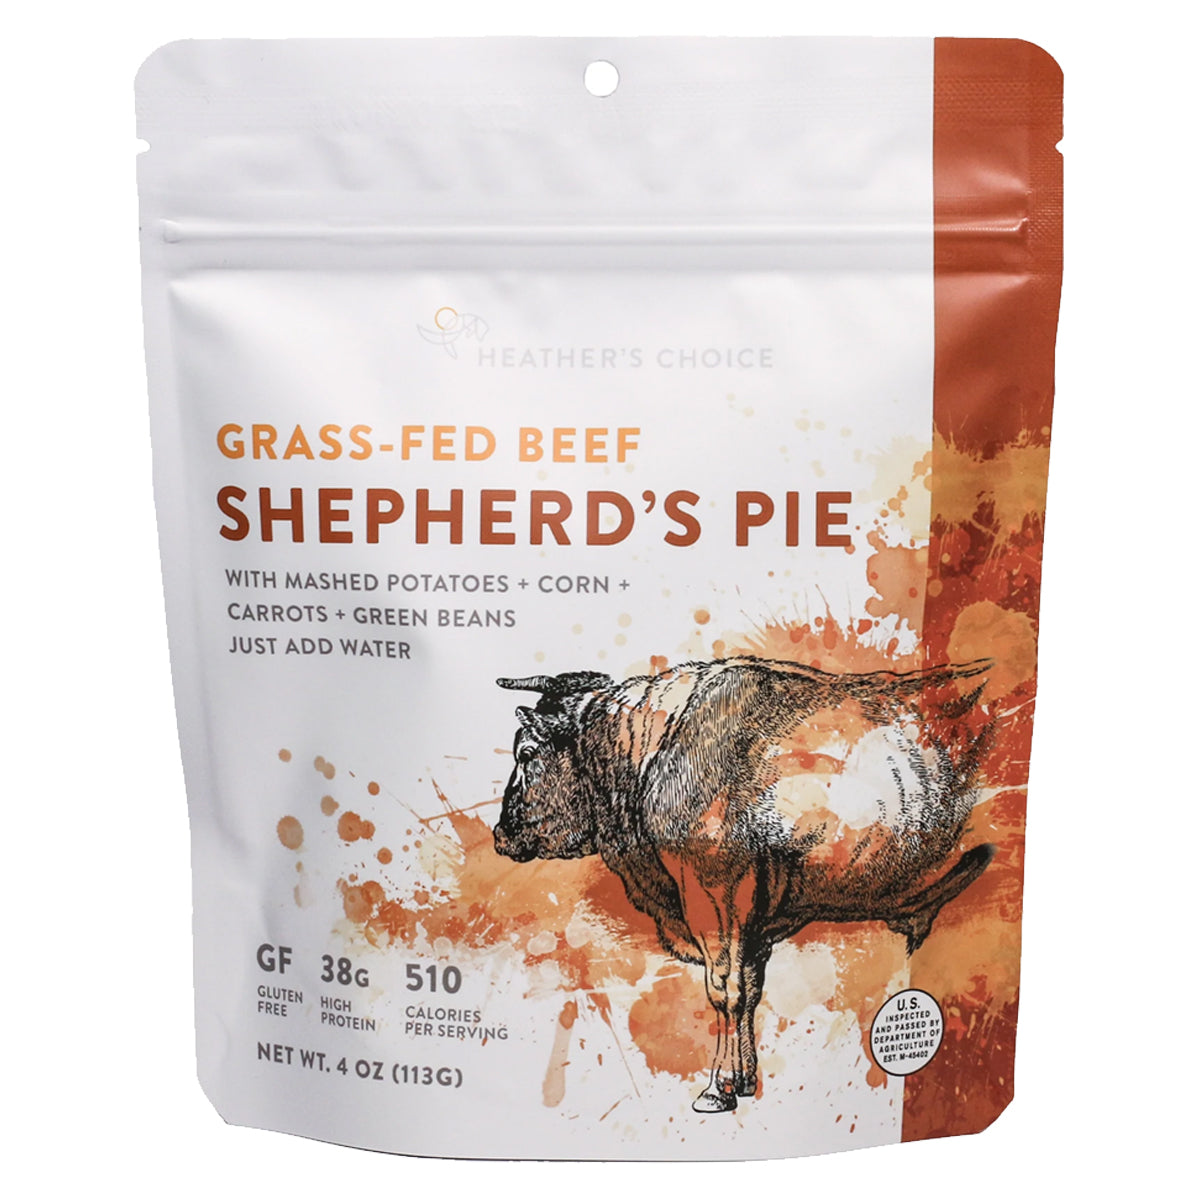 Heather's Choice Shepherd's Pie with Grass-Fed Beef